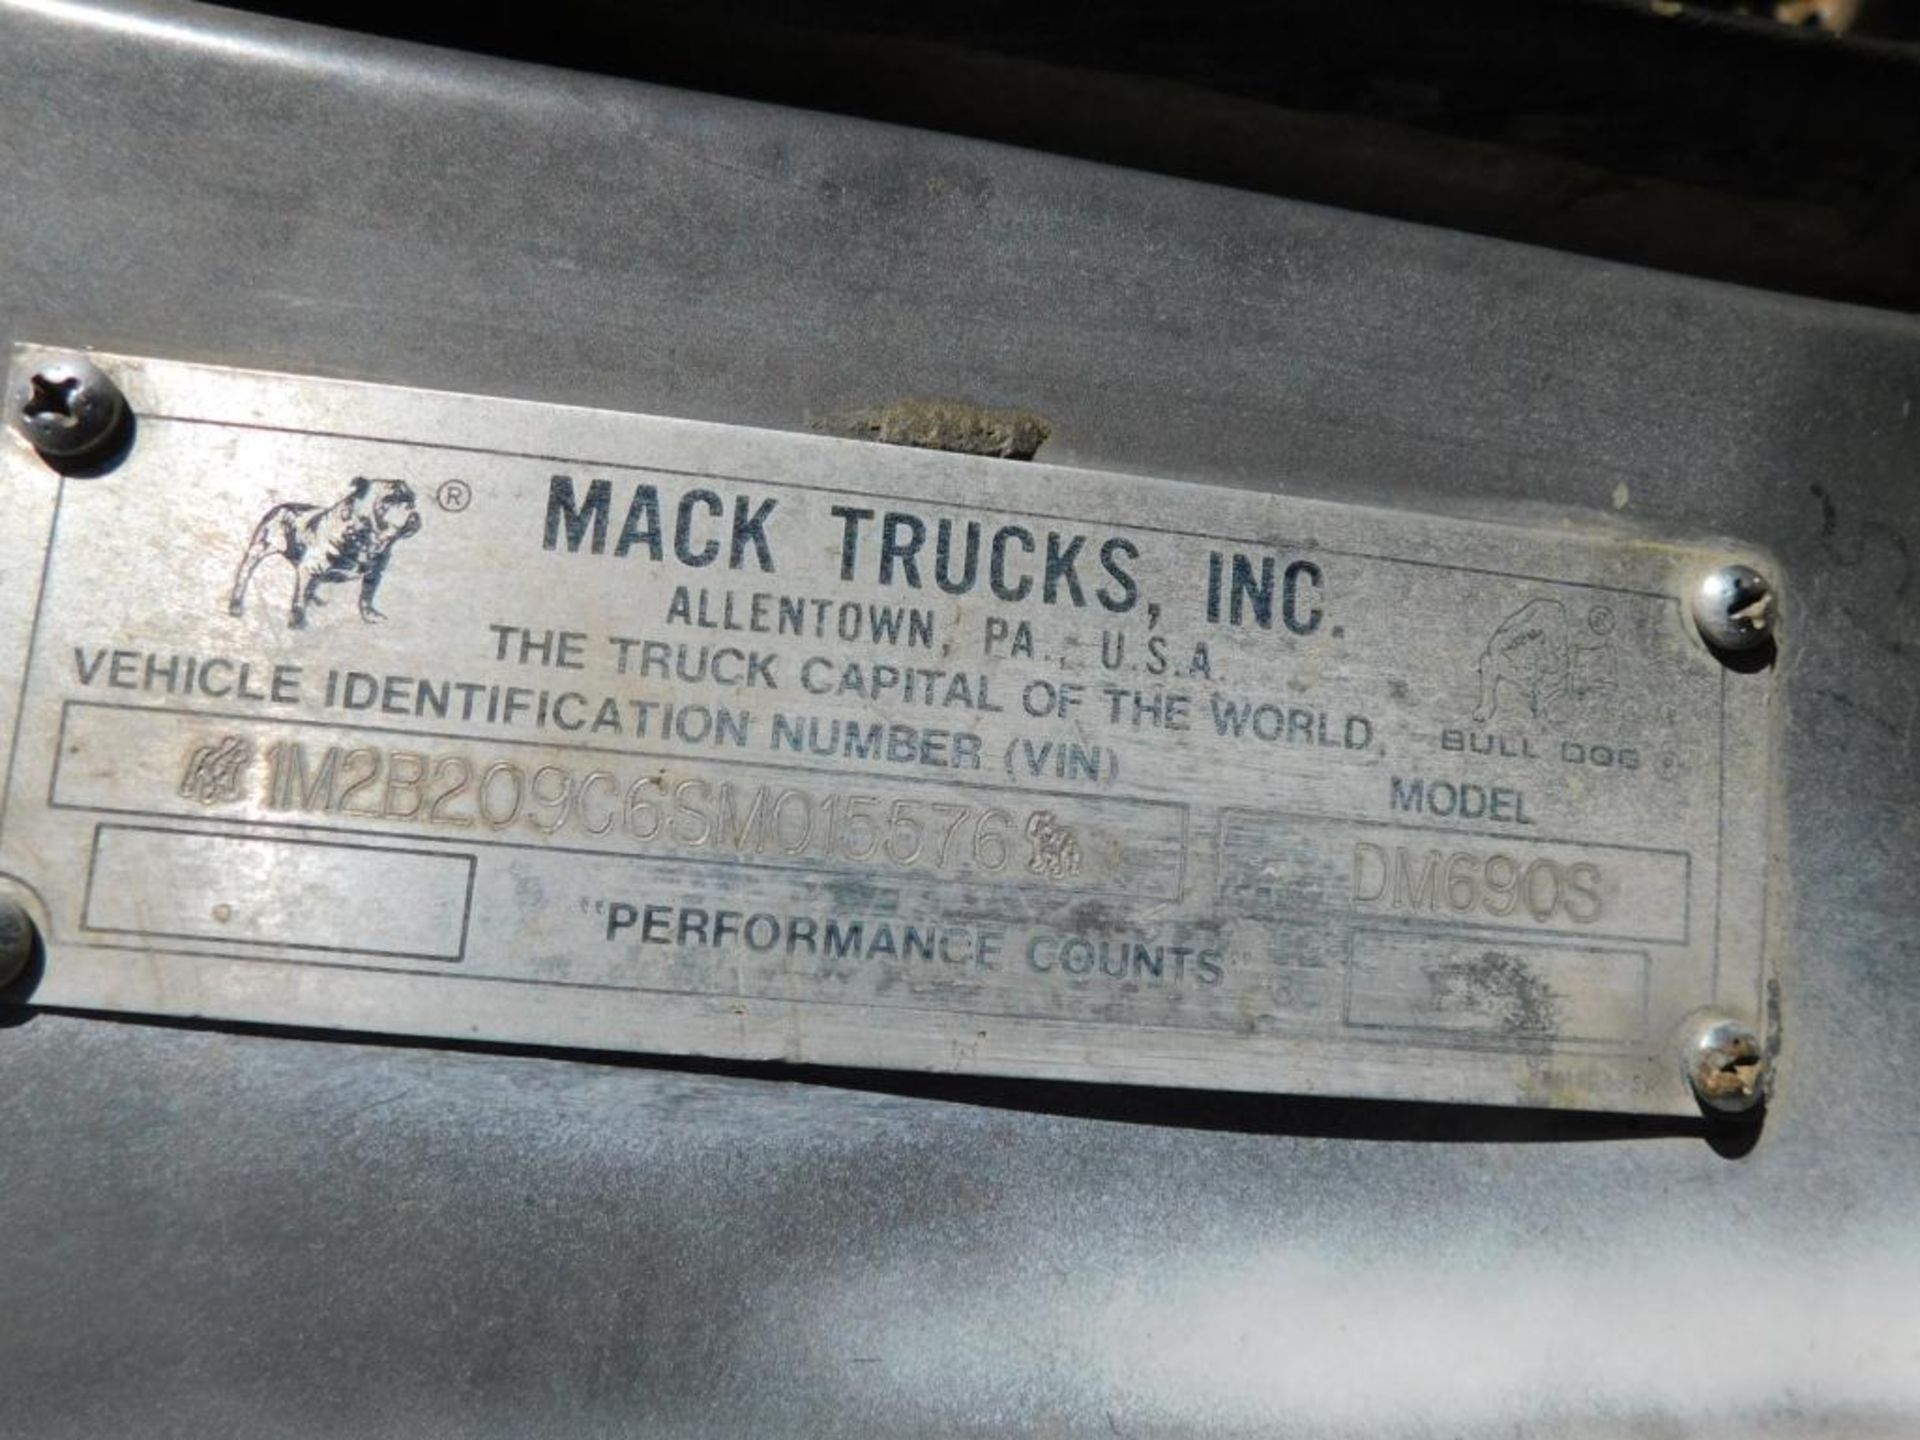 1995 Mack T. A. Roll Off Truck Model DM690S, VIN 1M2B209C65M015576, 1995 Galbreath 60,000 Lb. - Image 29 of 30